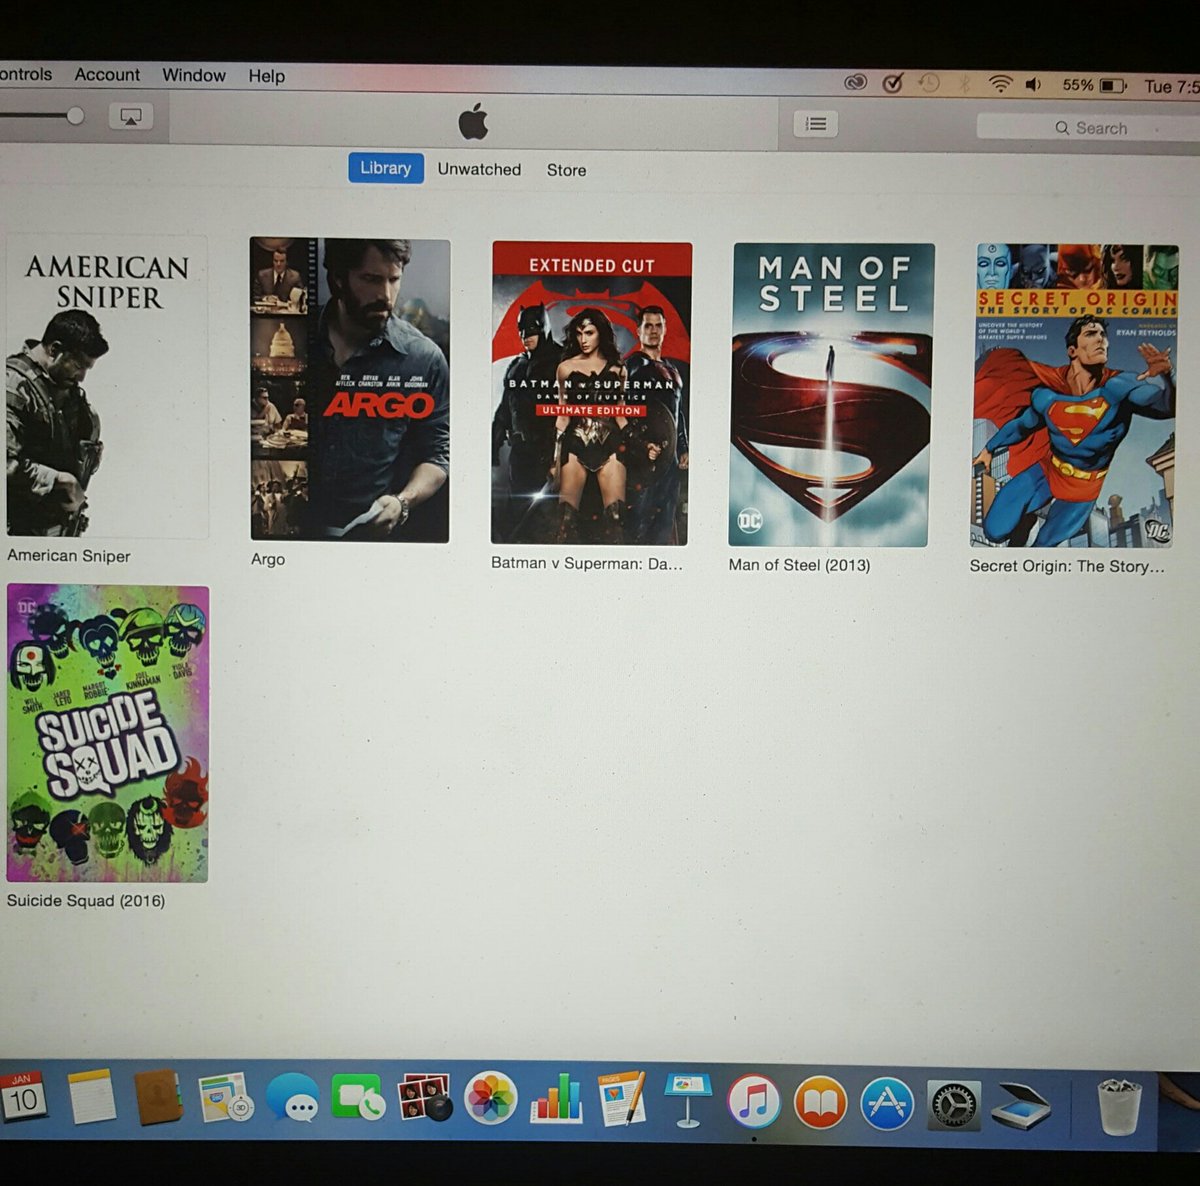 My #itunes movie collection so far. #americansniper #argo #BatmanvSupermanUltimateEdition #manofsteel #SuicideSquad #thestoryofdccomics